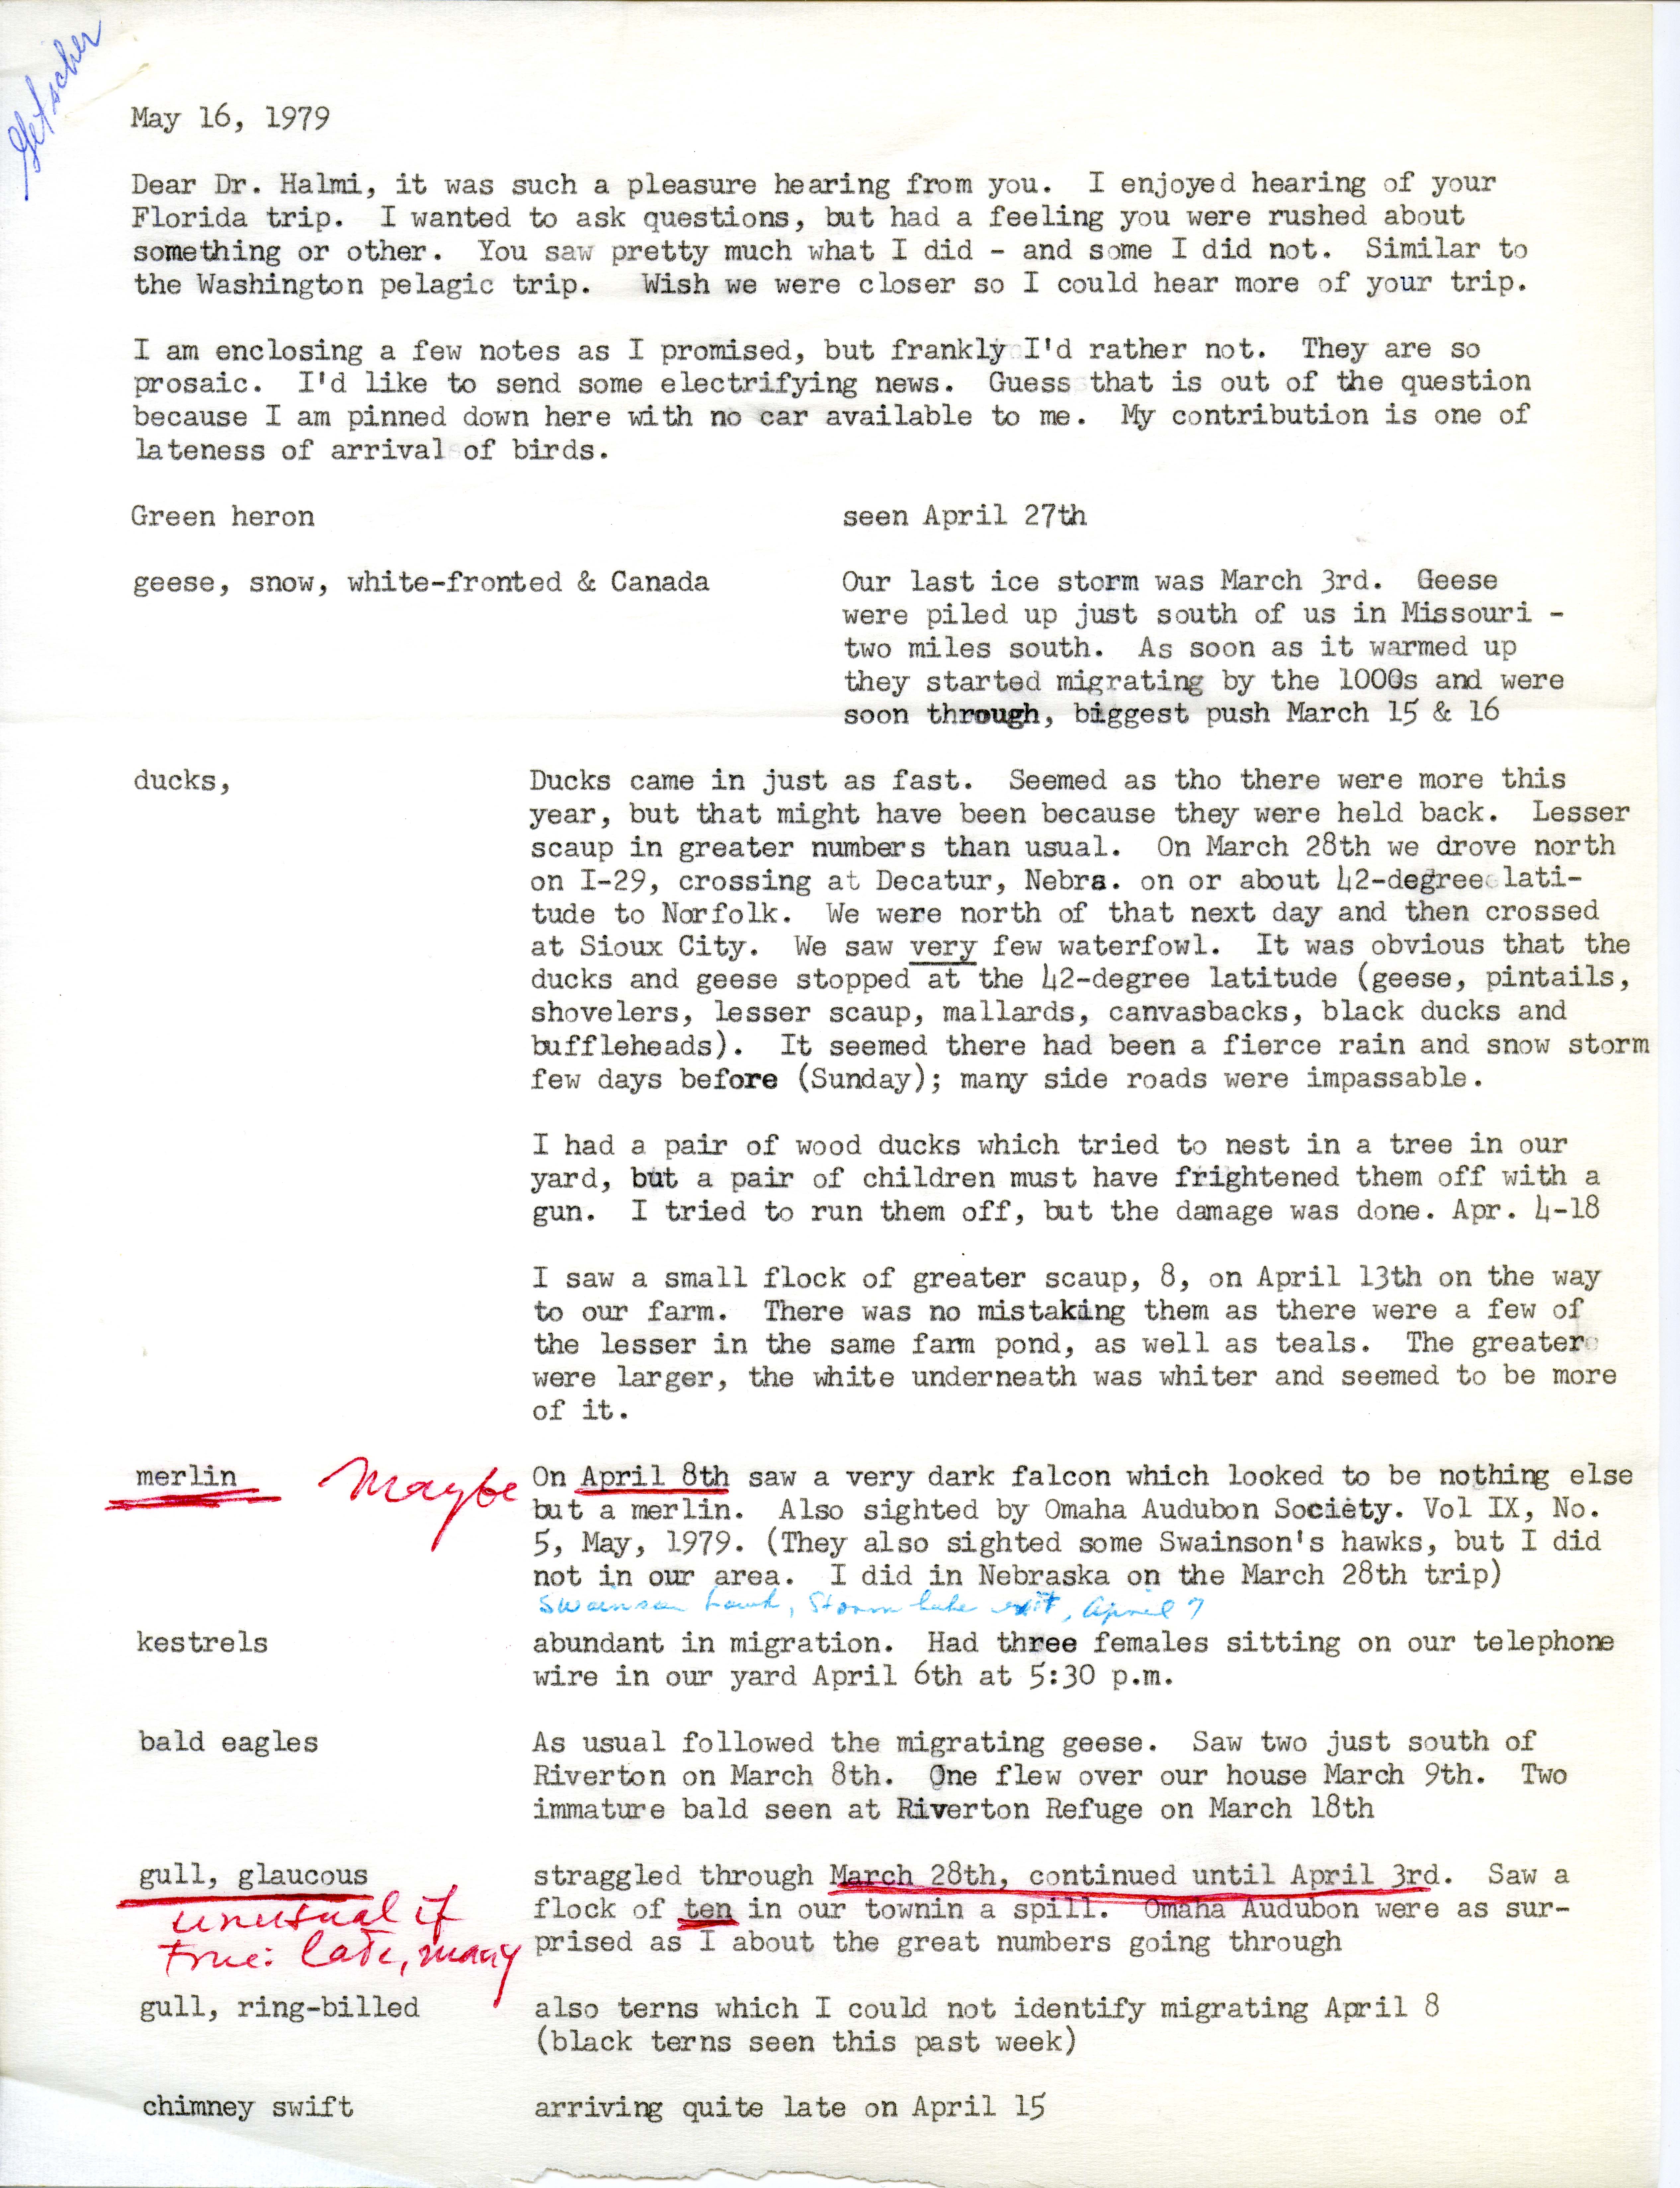 Ione Getscher letter to Nicholas S. Halmi regarding spring bird sightings, May 16, 1979